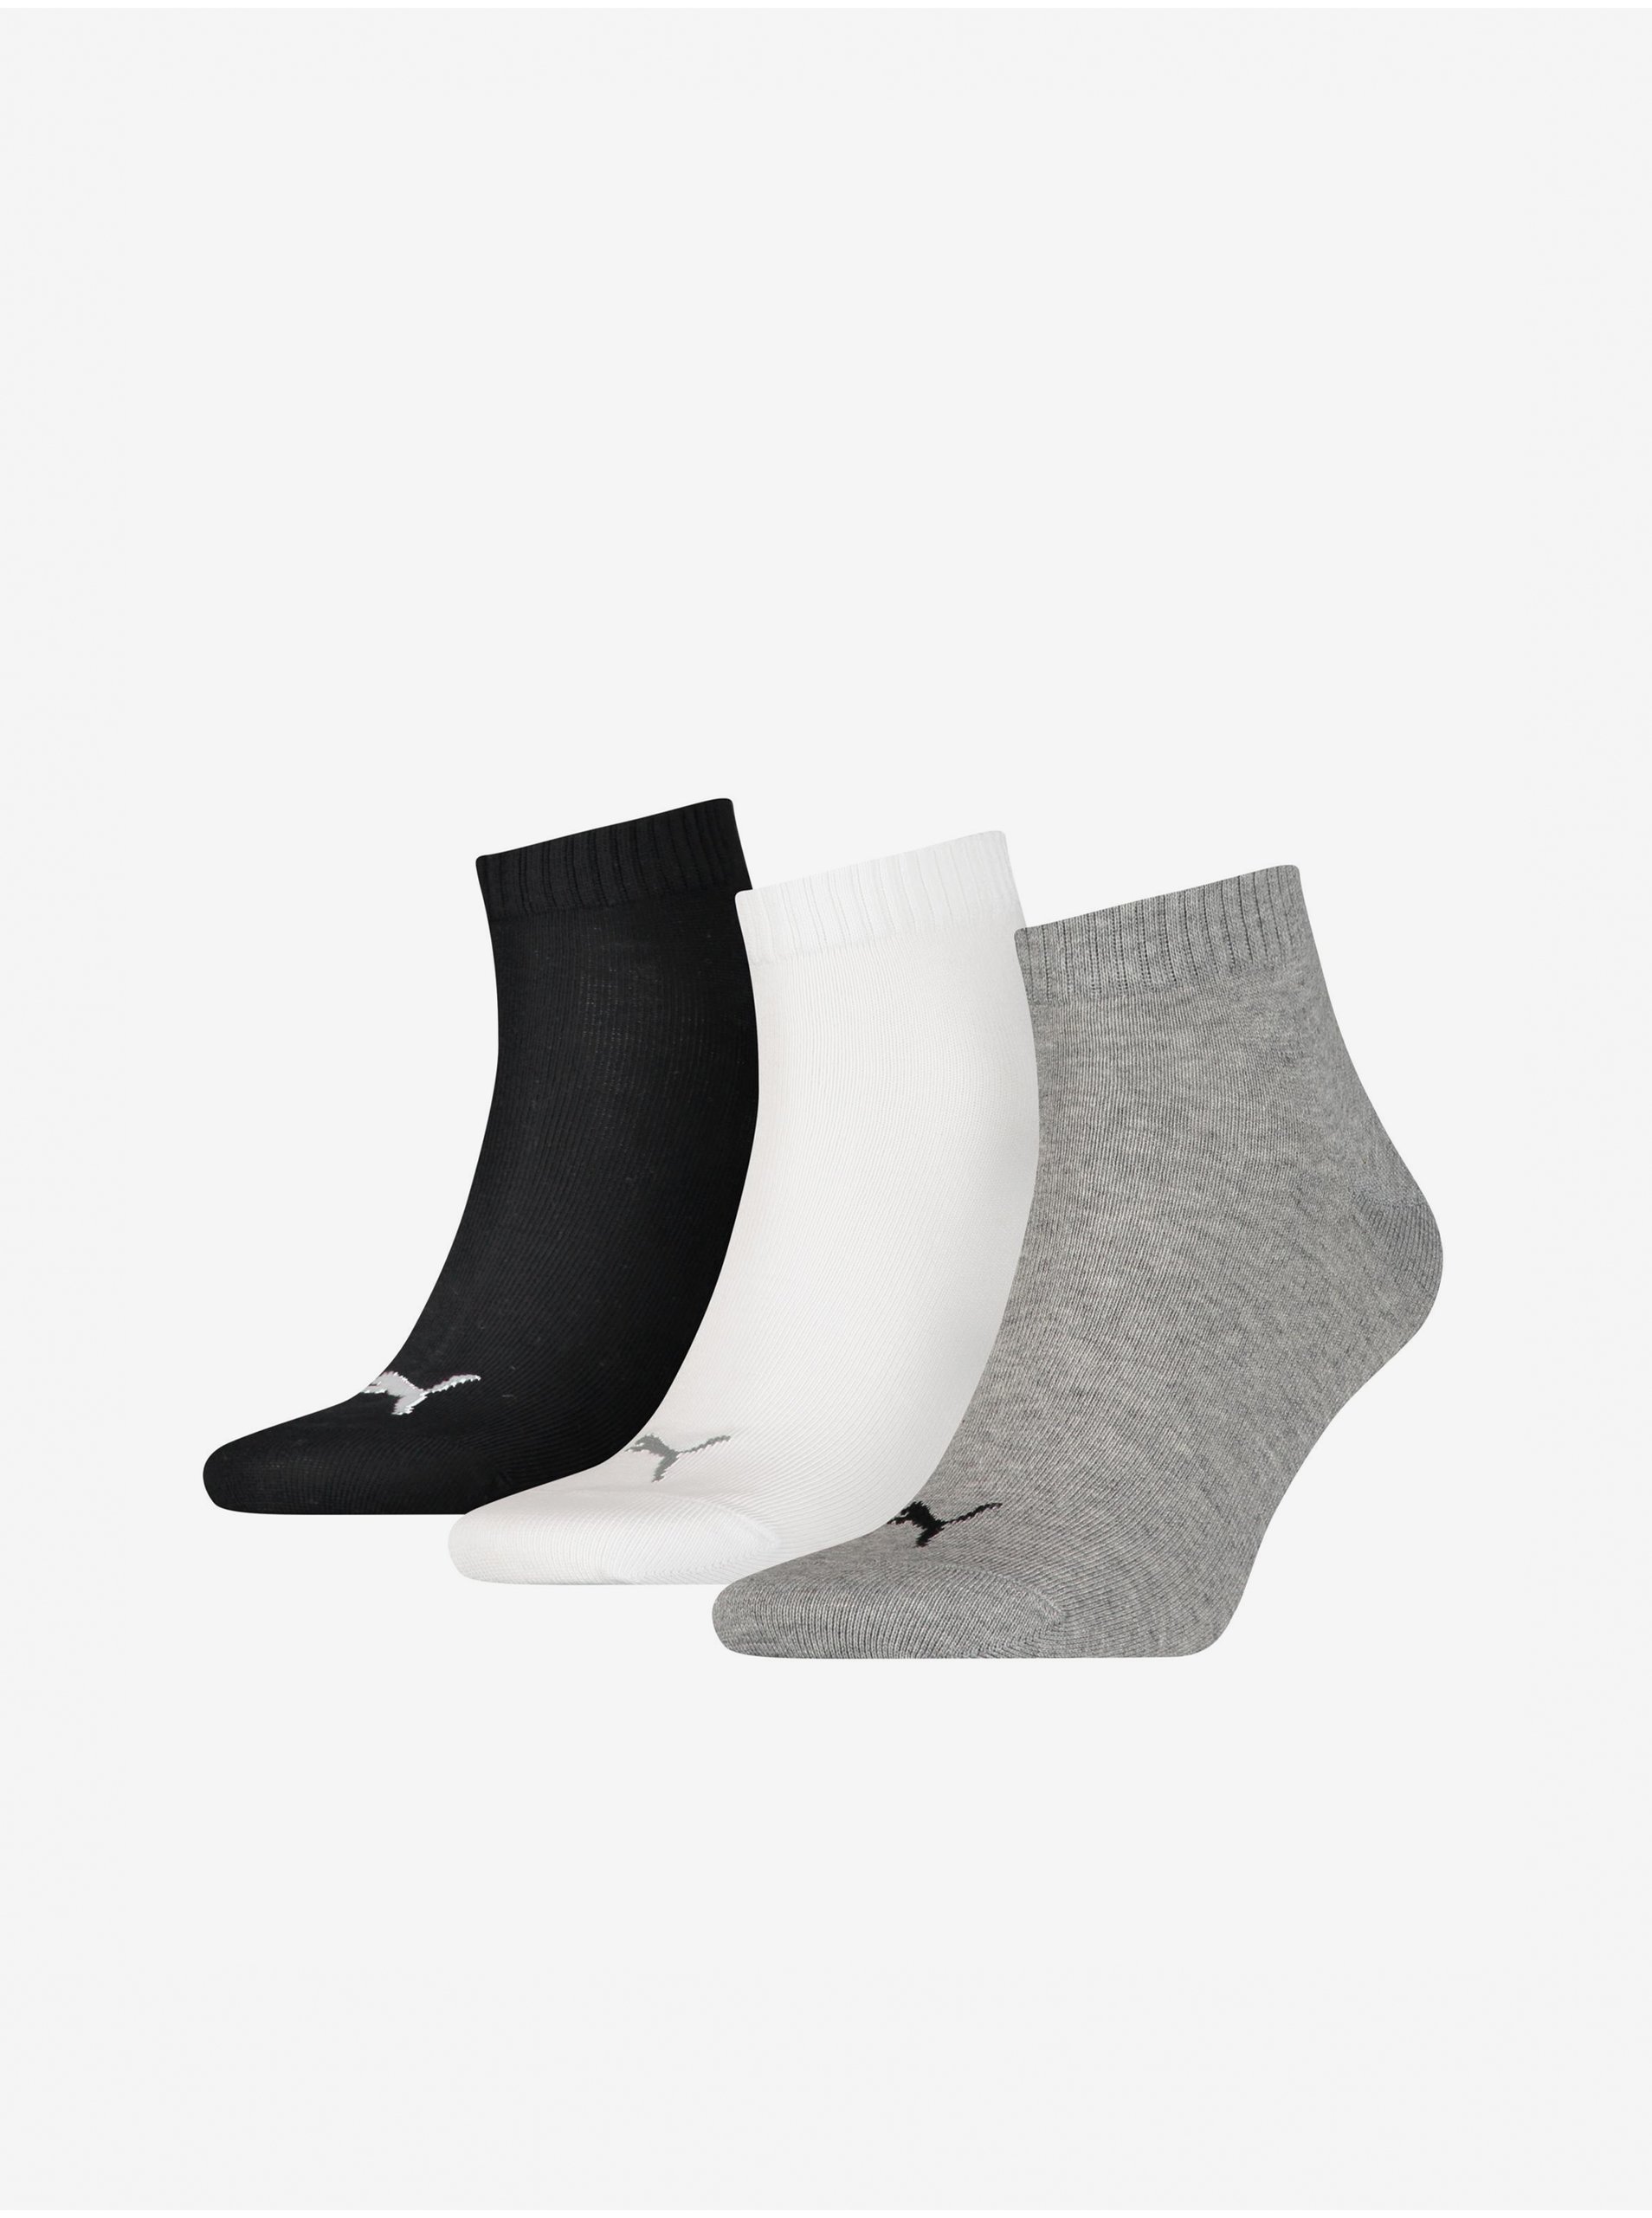 Set of three pairs of socks in gray, white and black Puma - Men